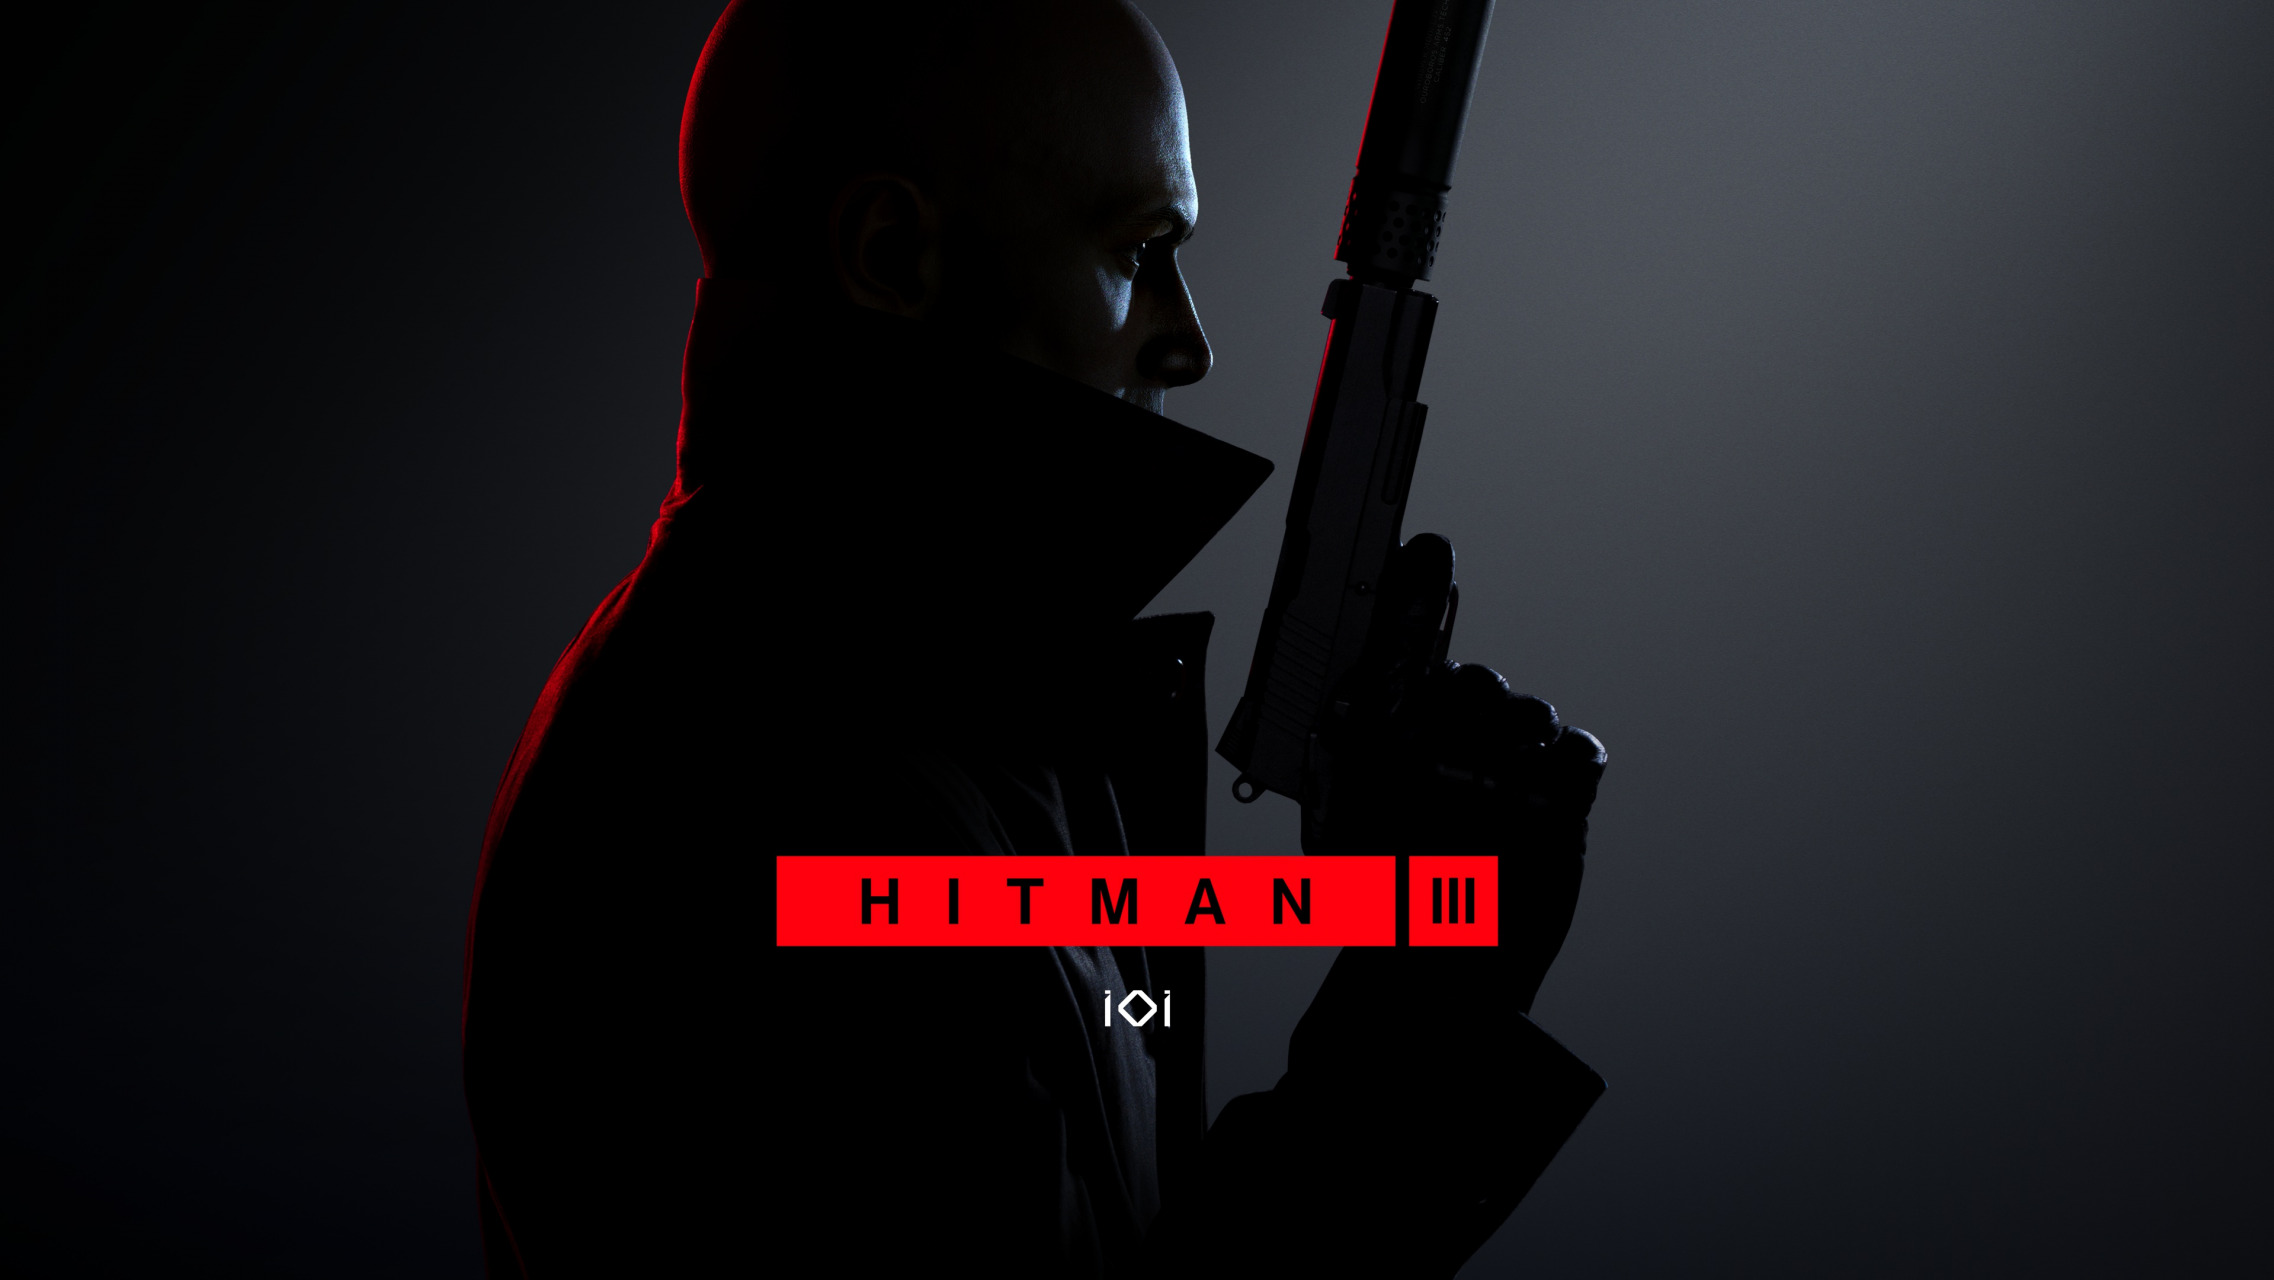 Codename 47 Hitman Hitman 3 Black Coat Video Games Pistol Video Game Characters Simple Background 2274x1280